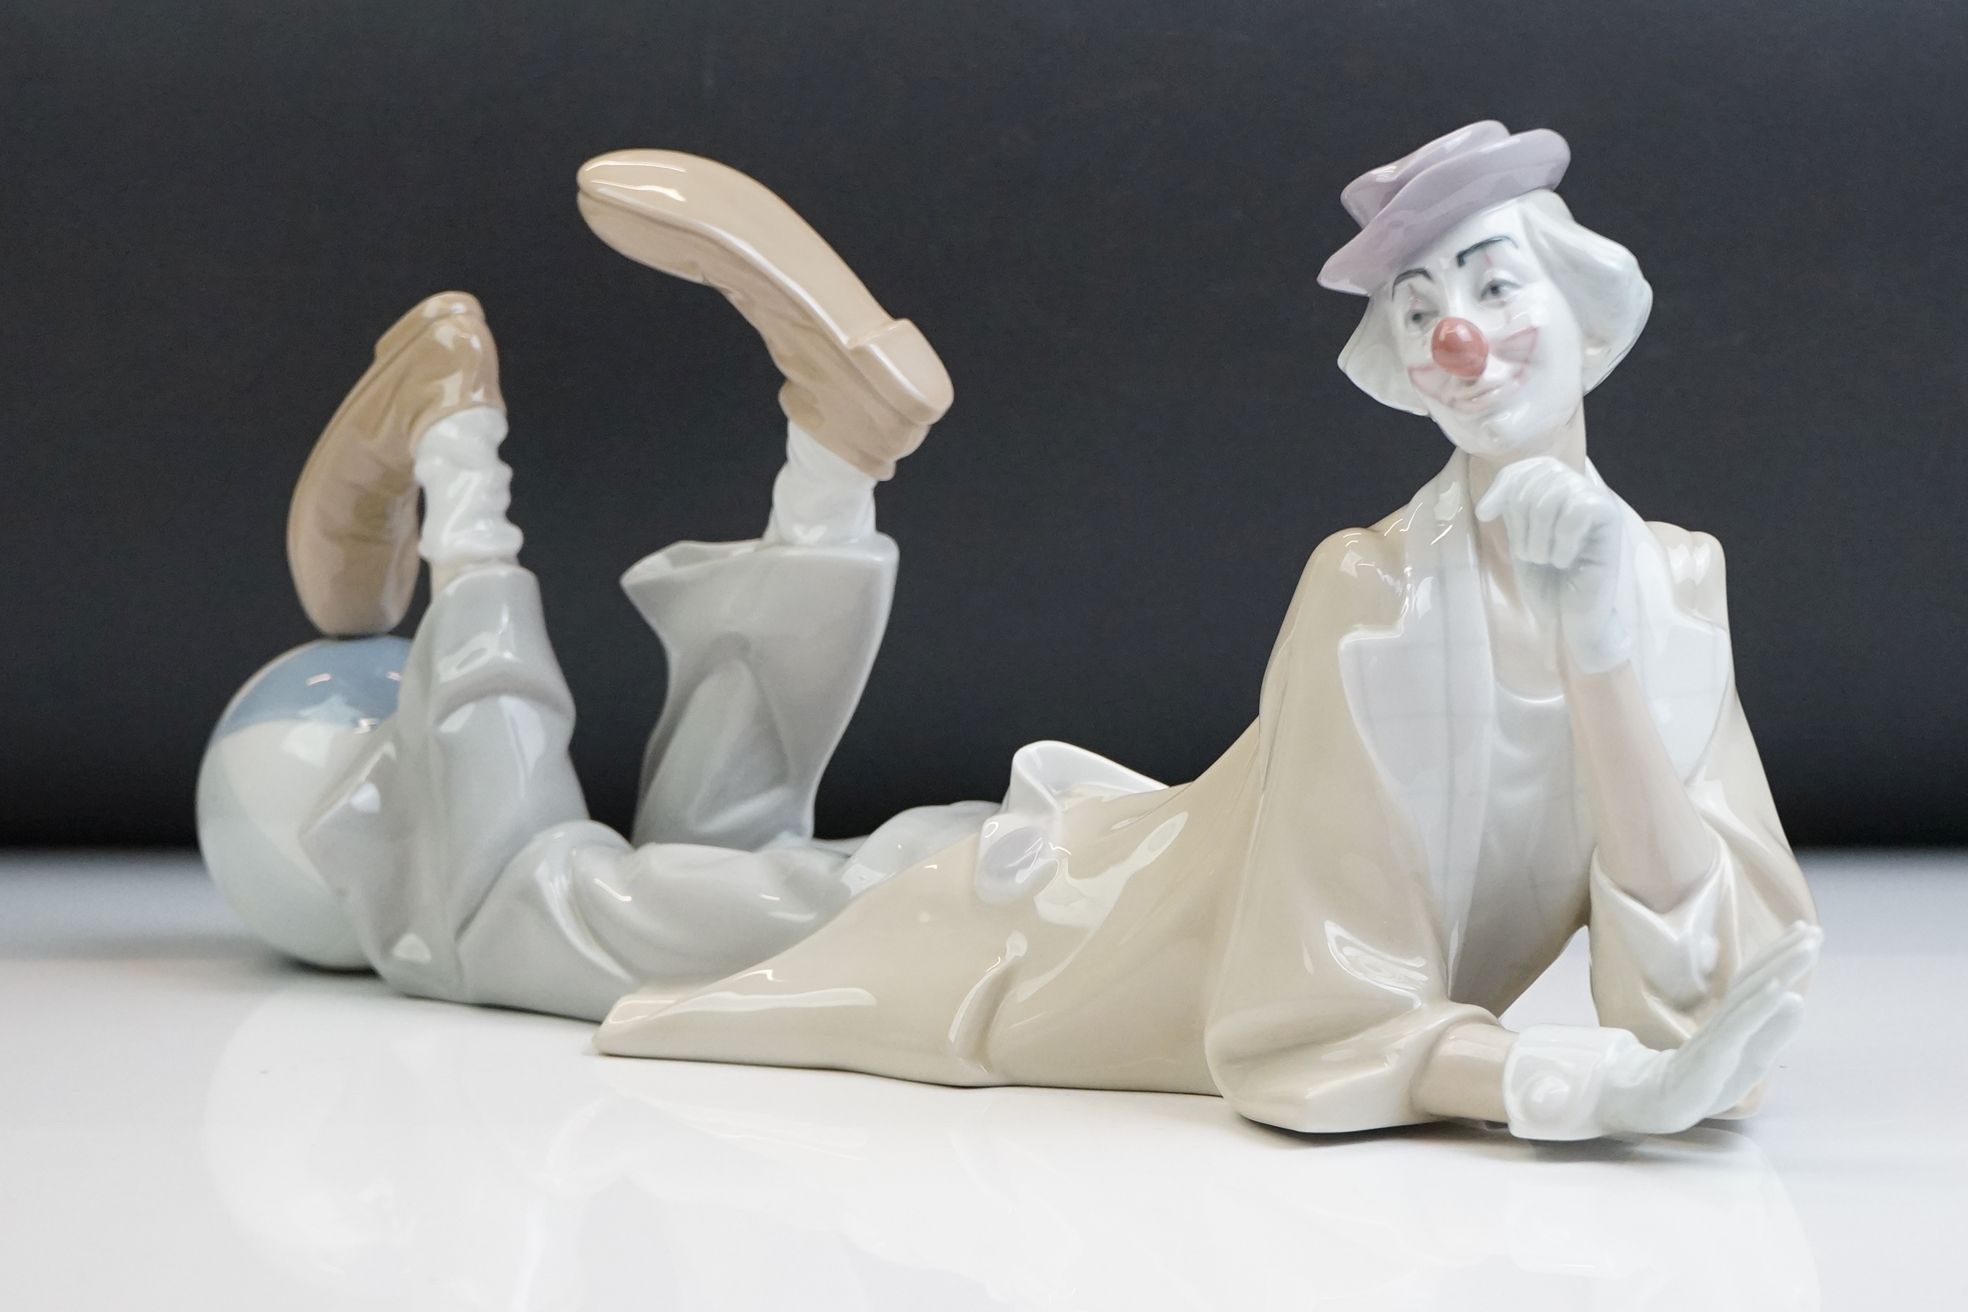 Lladro Reclining Clown porcelain figure, model no. 4618, gloss finish, approx 36.5cm long